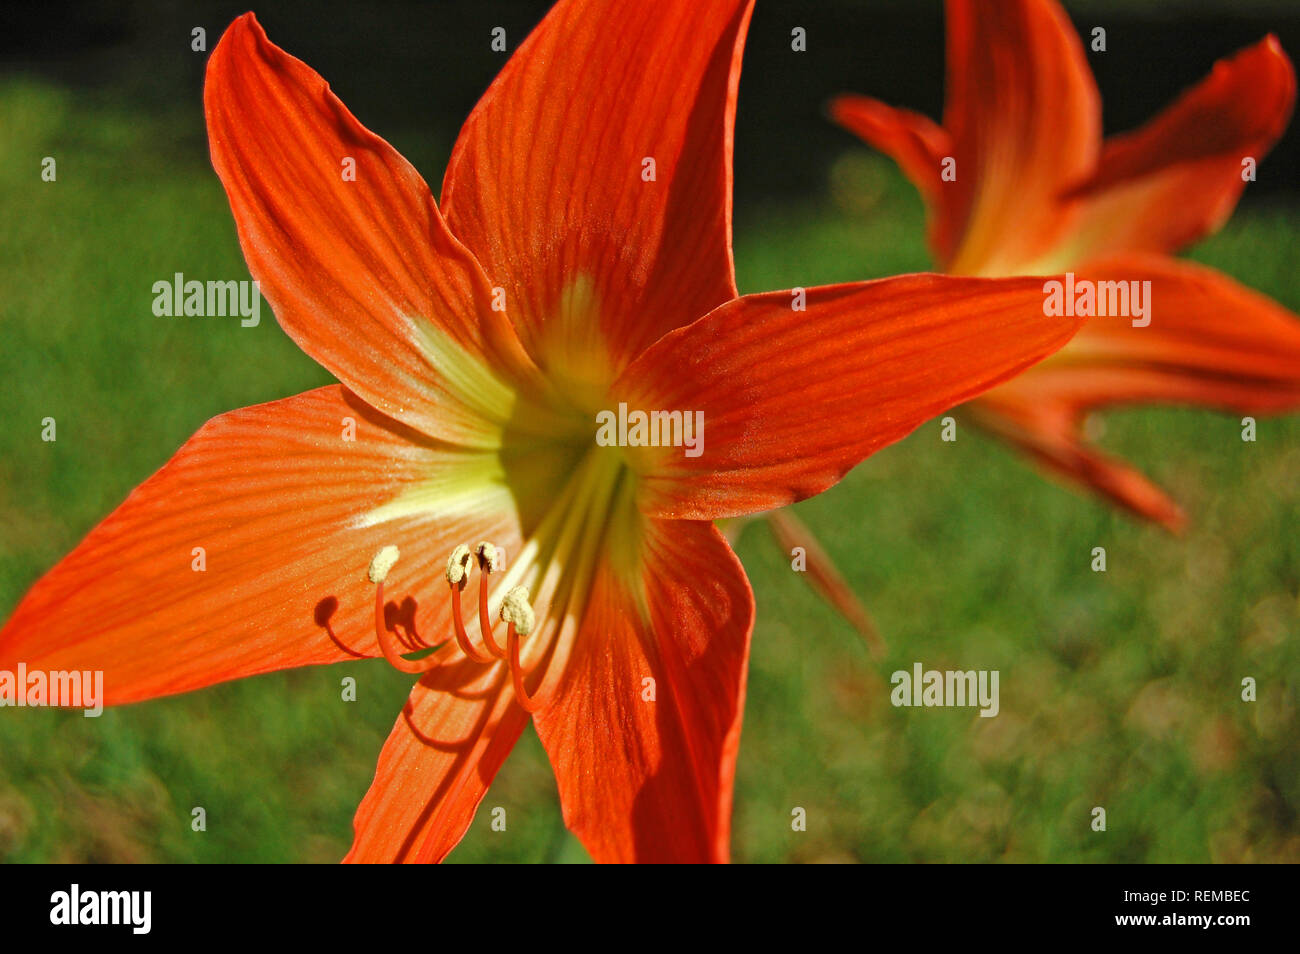 Amarillis close up, red flower Stock Photo